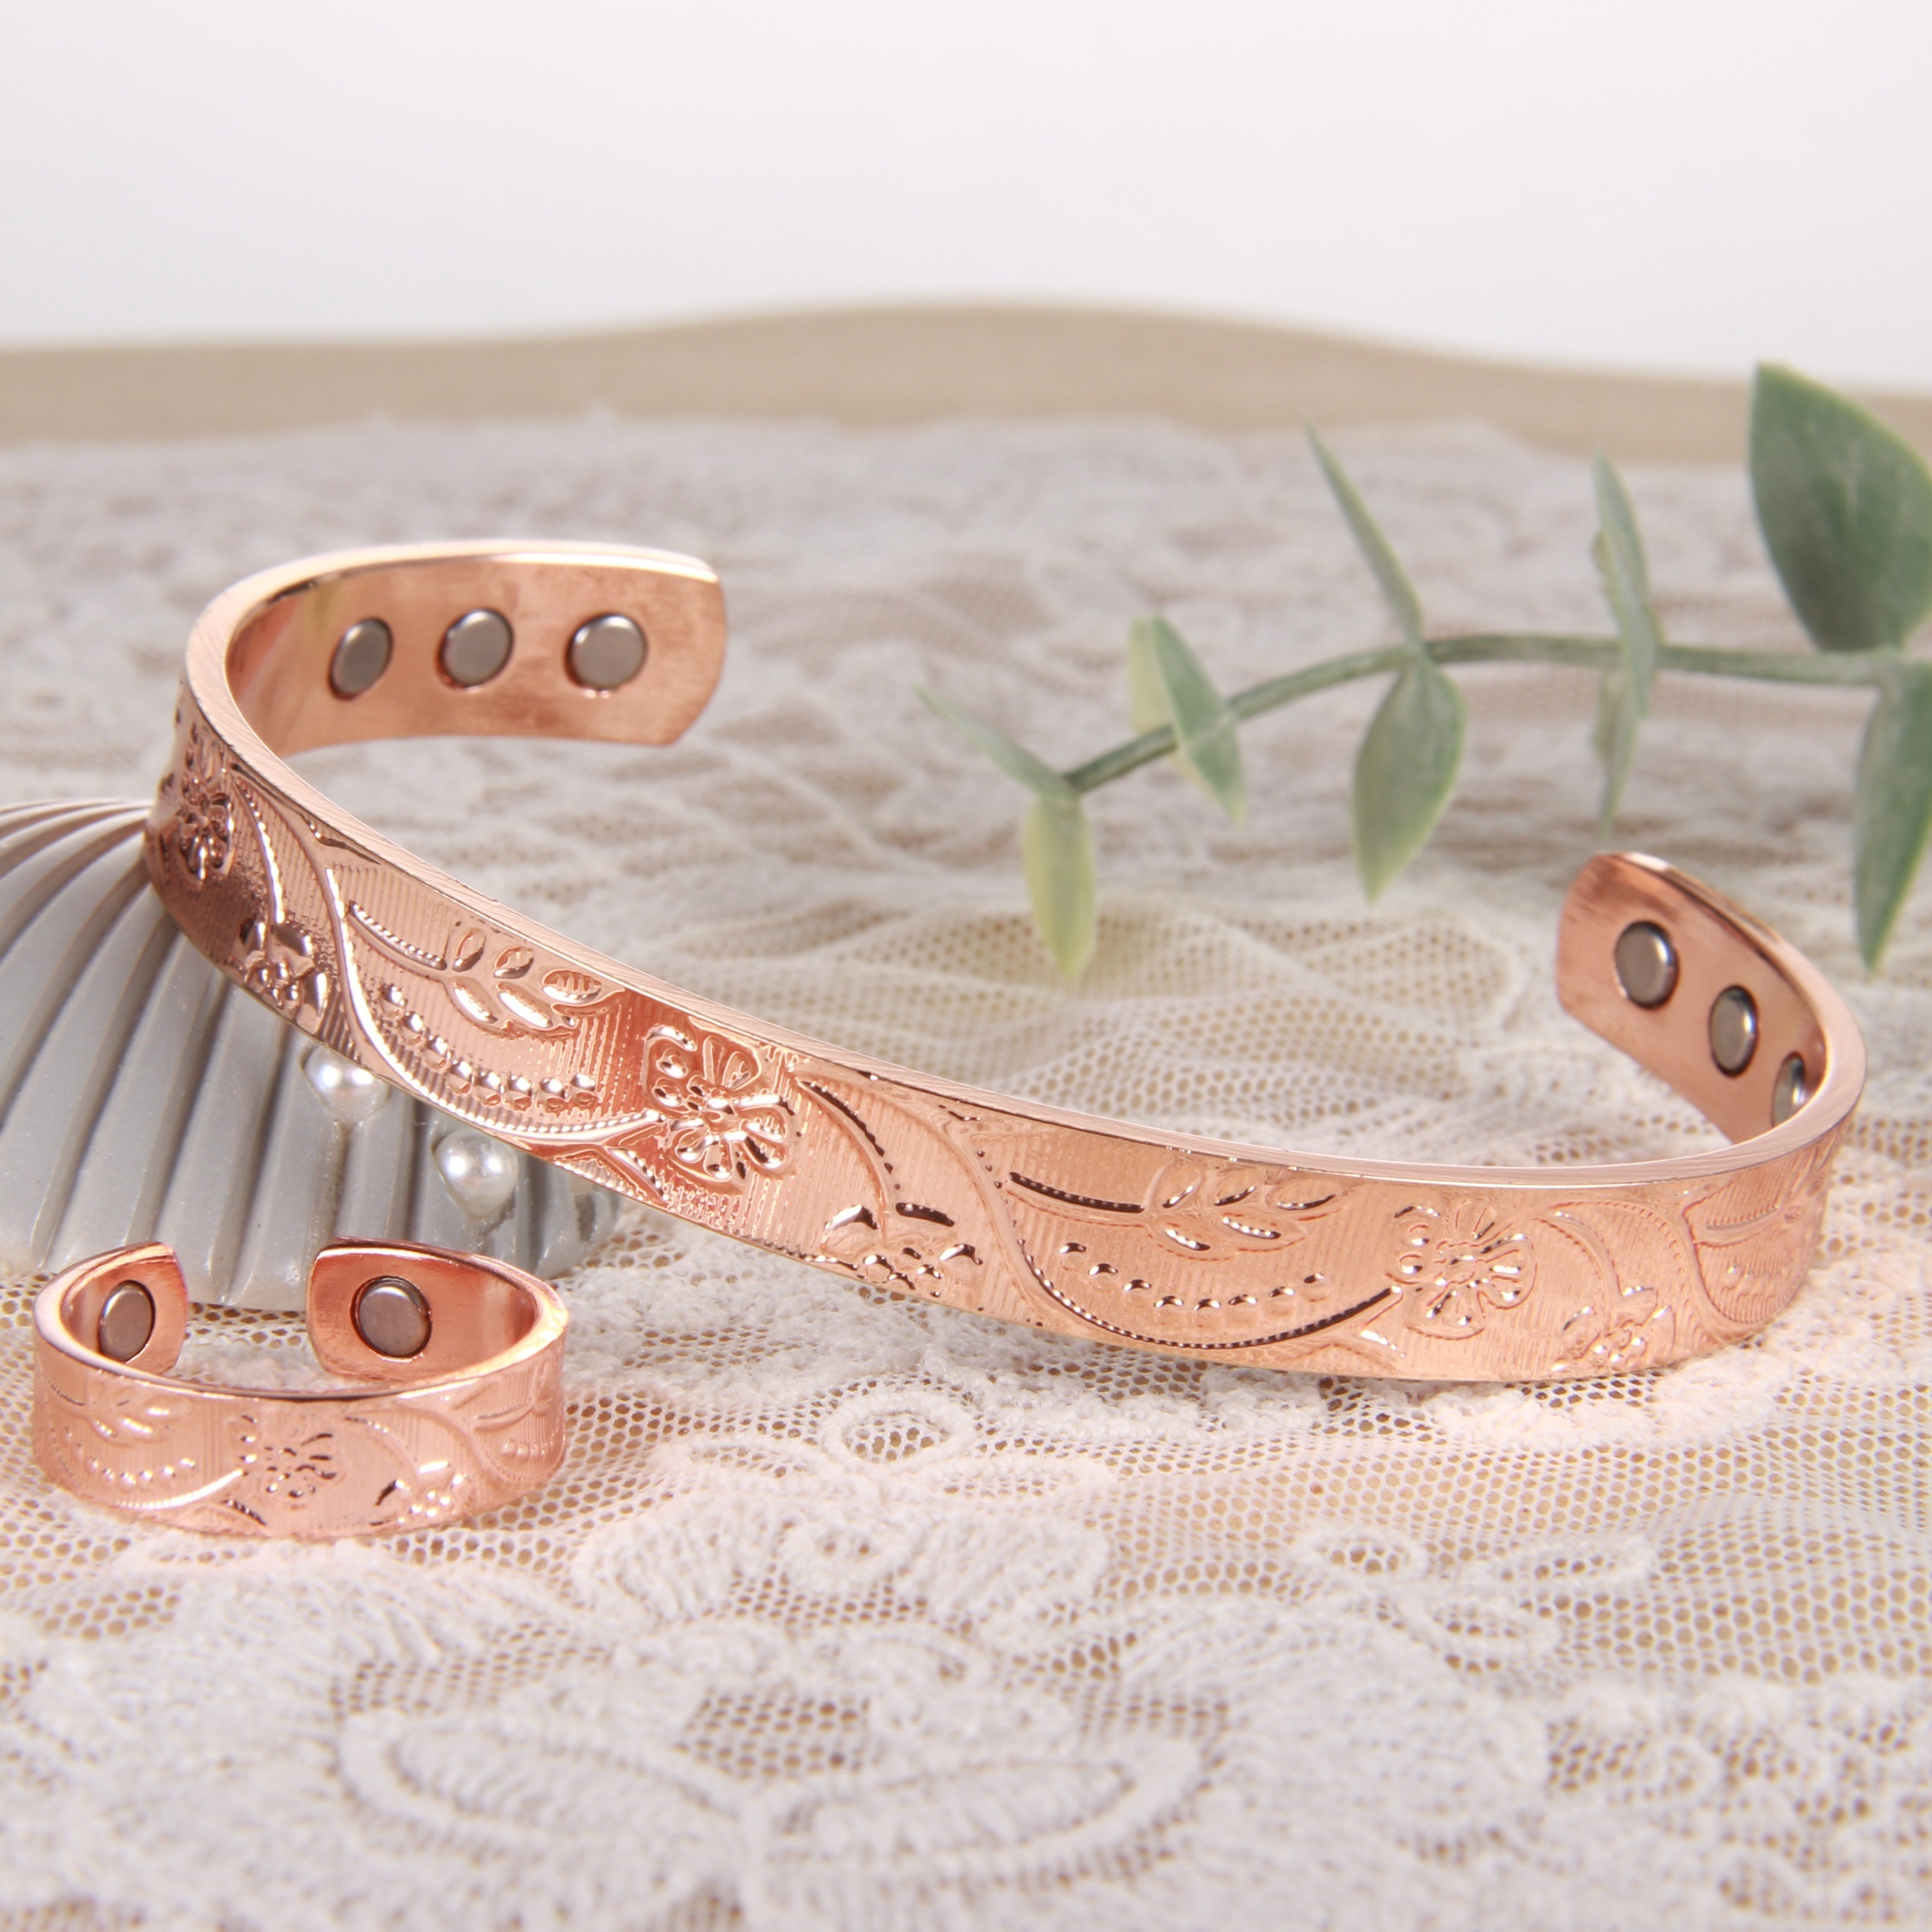 1pc Pure Copper Bracelets for Women, Ultra Magnetic Bracelets for Women with 3500 Gauss Magnets, Lymphatic Drainage Copper Bracelet, Crystal Mother